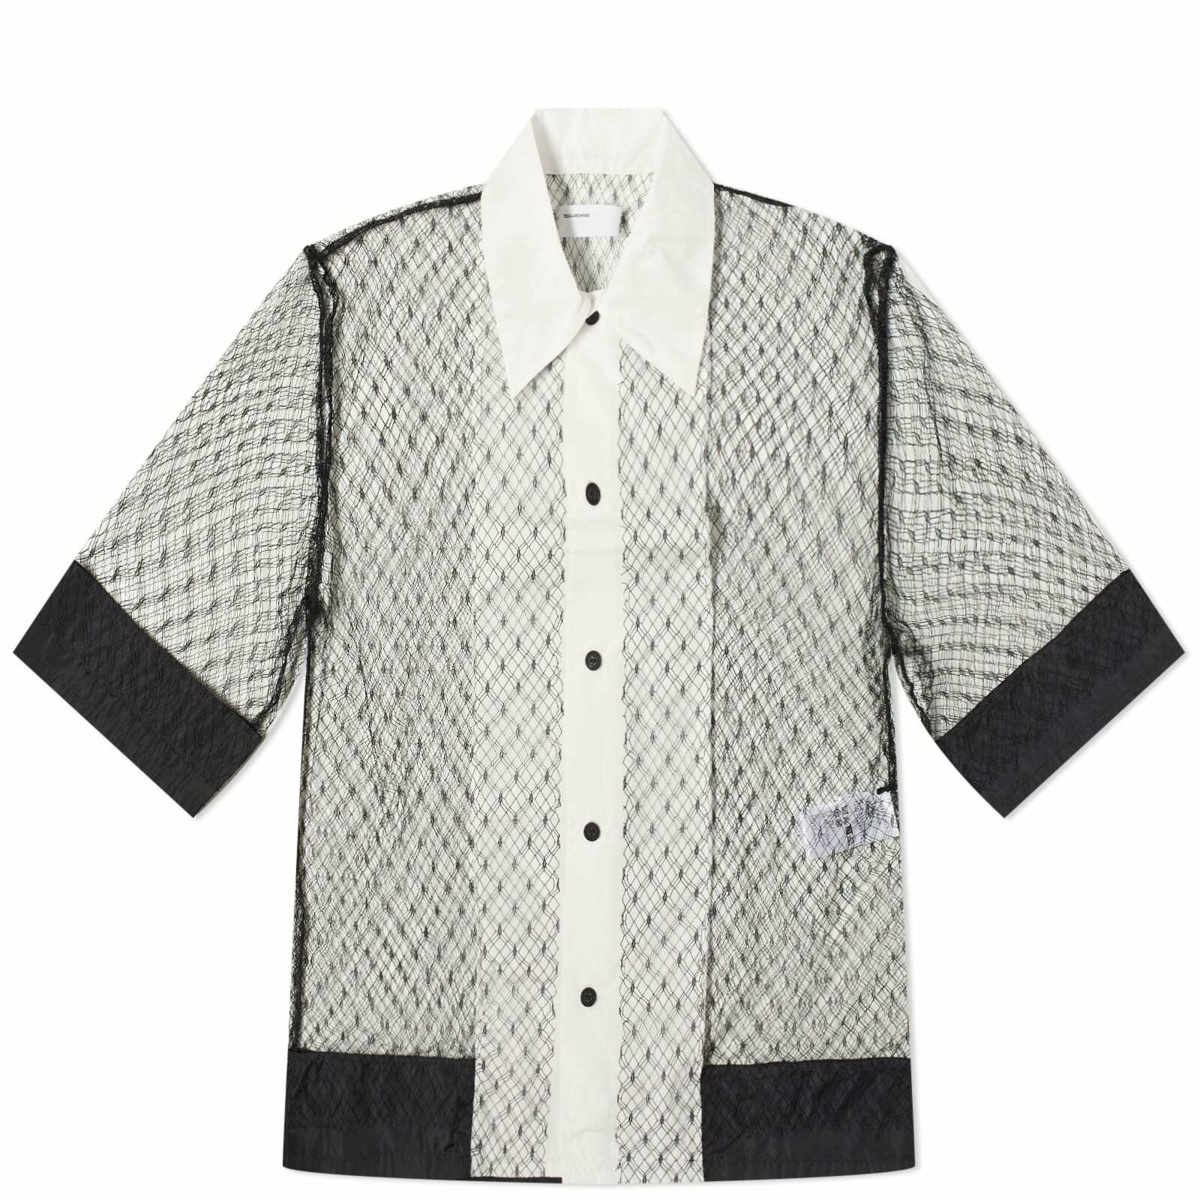 TOGA Women's Nylon Twill Poncho Jacket in Khaki Toga Pulla